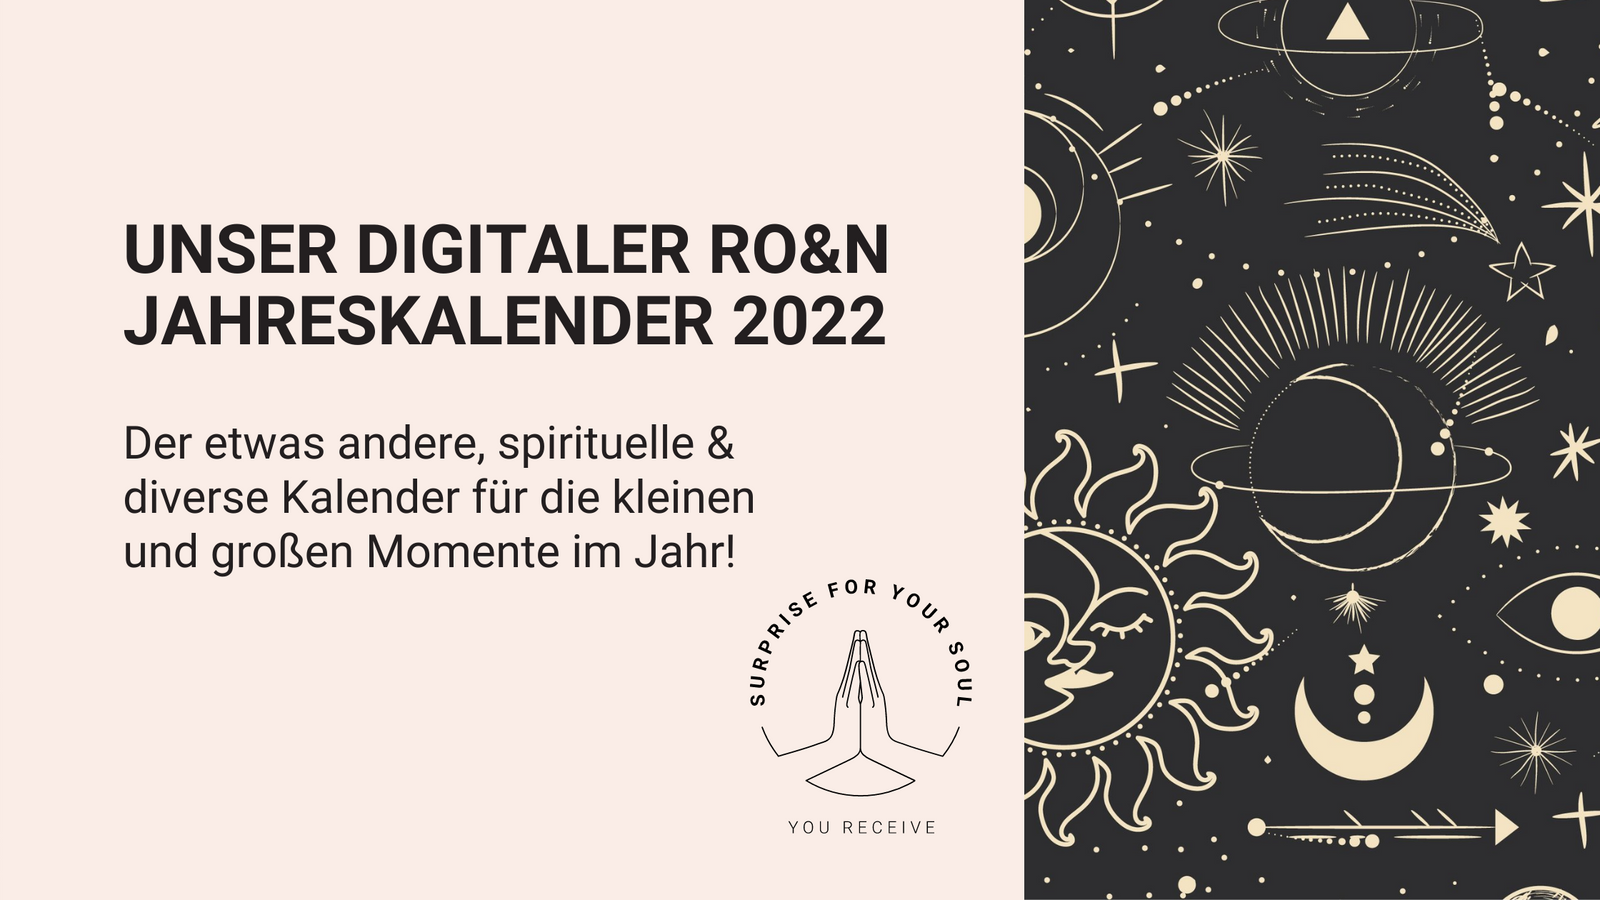 Unser Digitaler RO&N Jahreskalender 2022